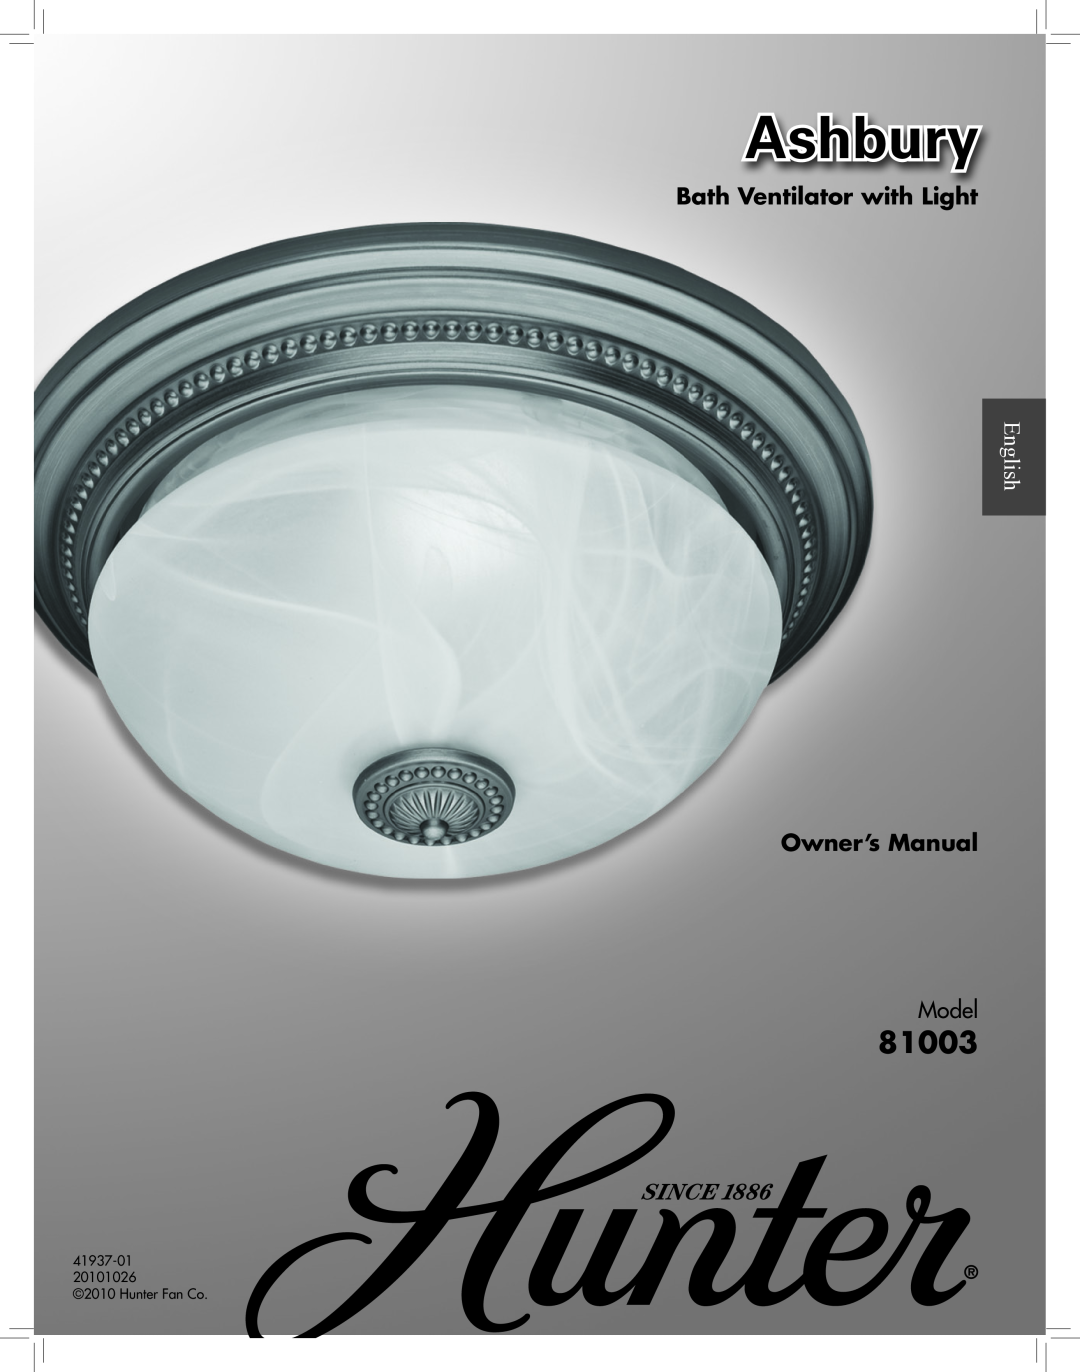 Hunter Fan manual READ and SAVE THESE INSTRUCTIONS, 81001 & 81003 Ashbury Bath Ventilator with Light, G u i d e 